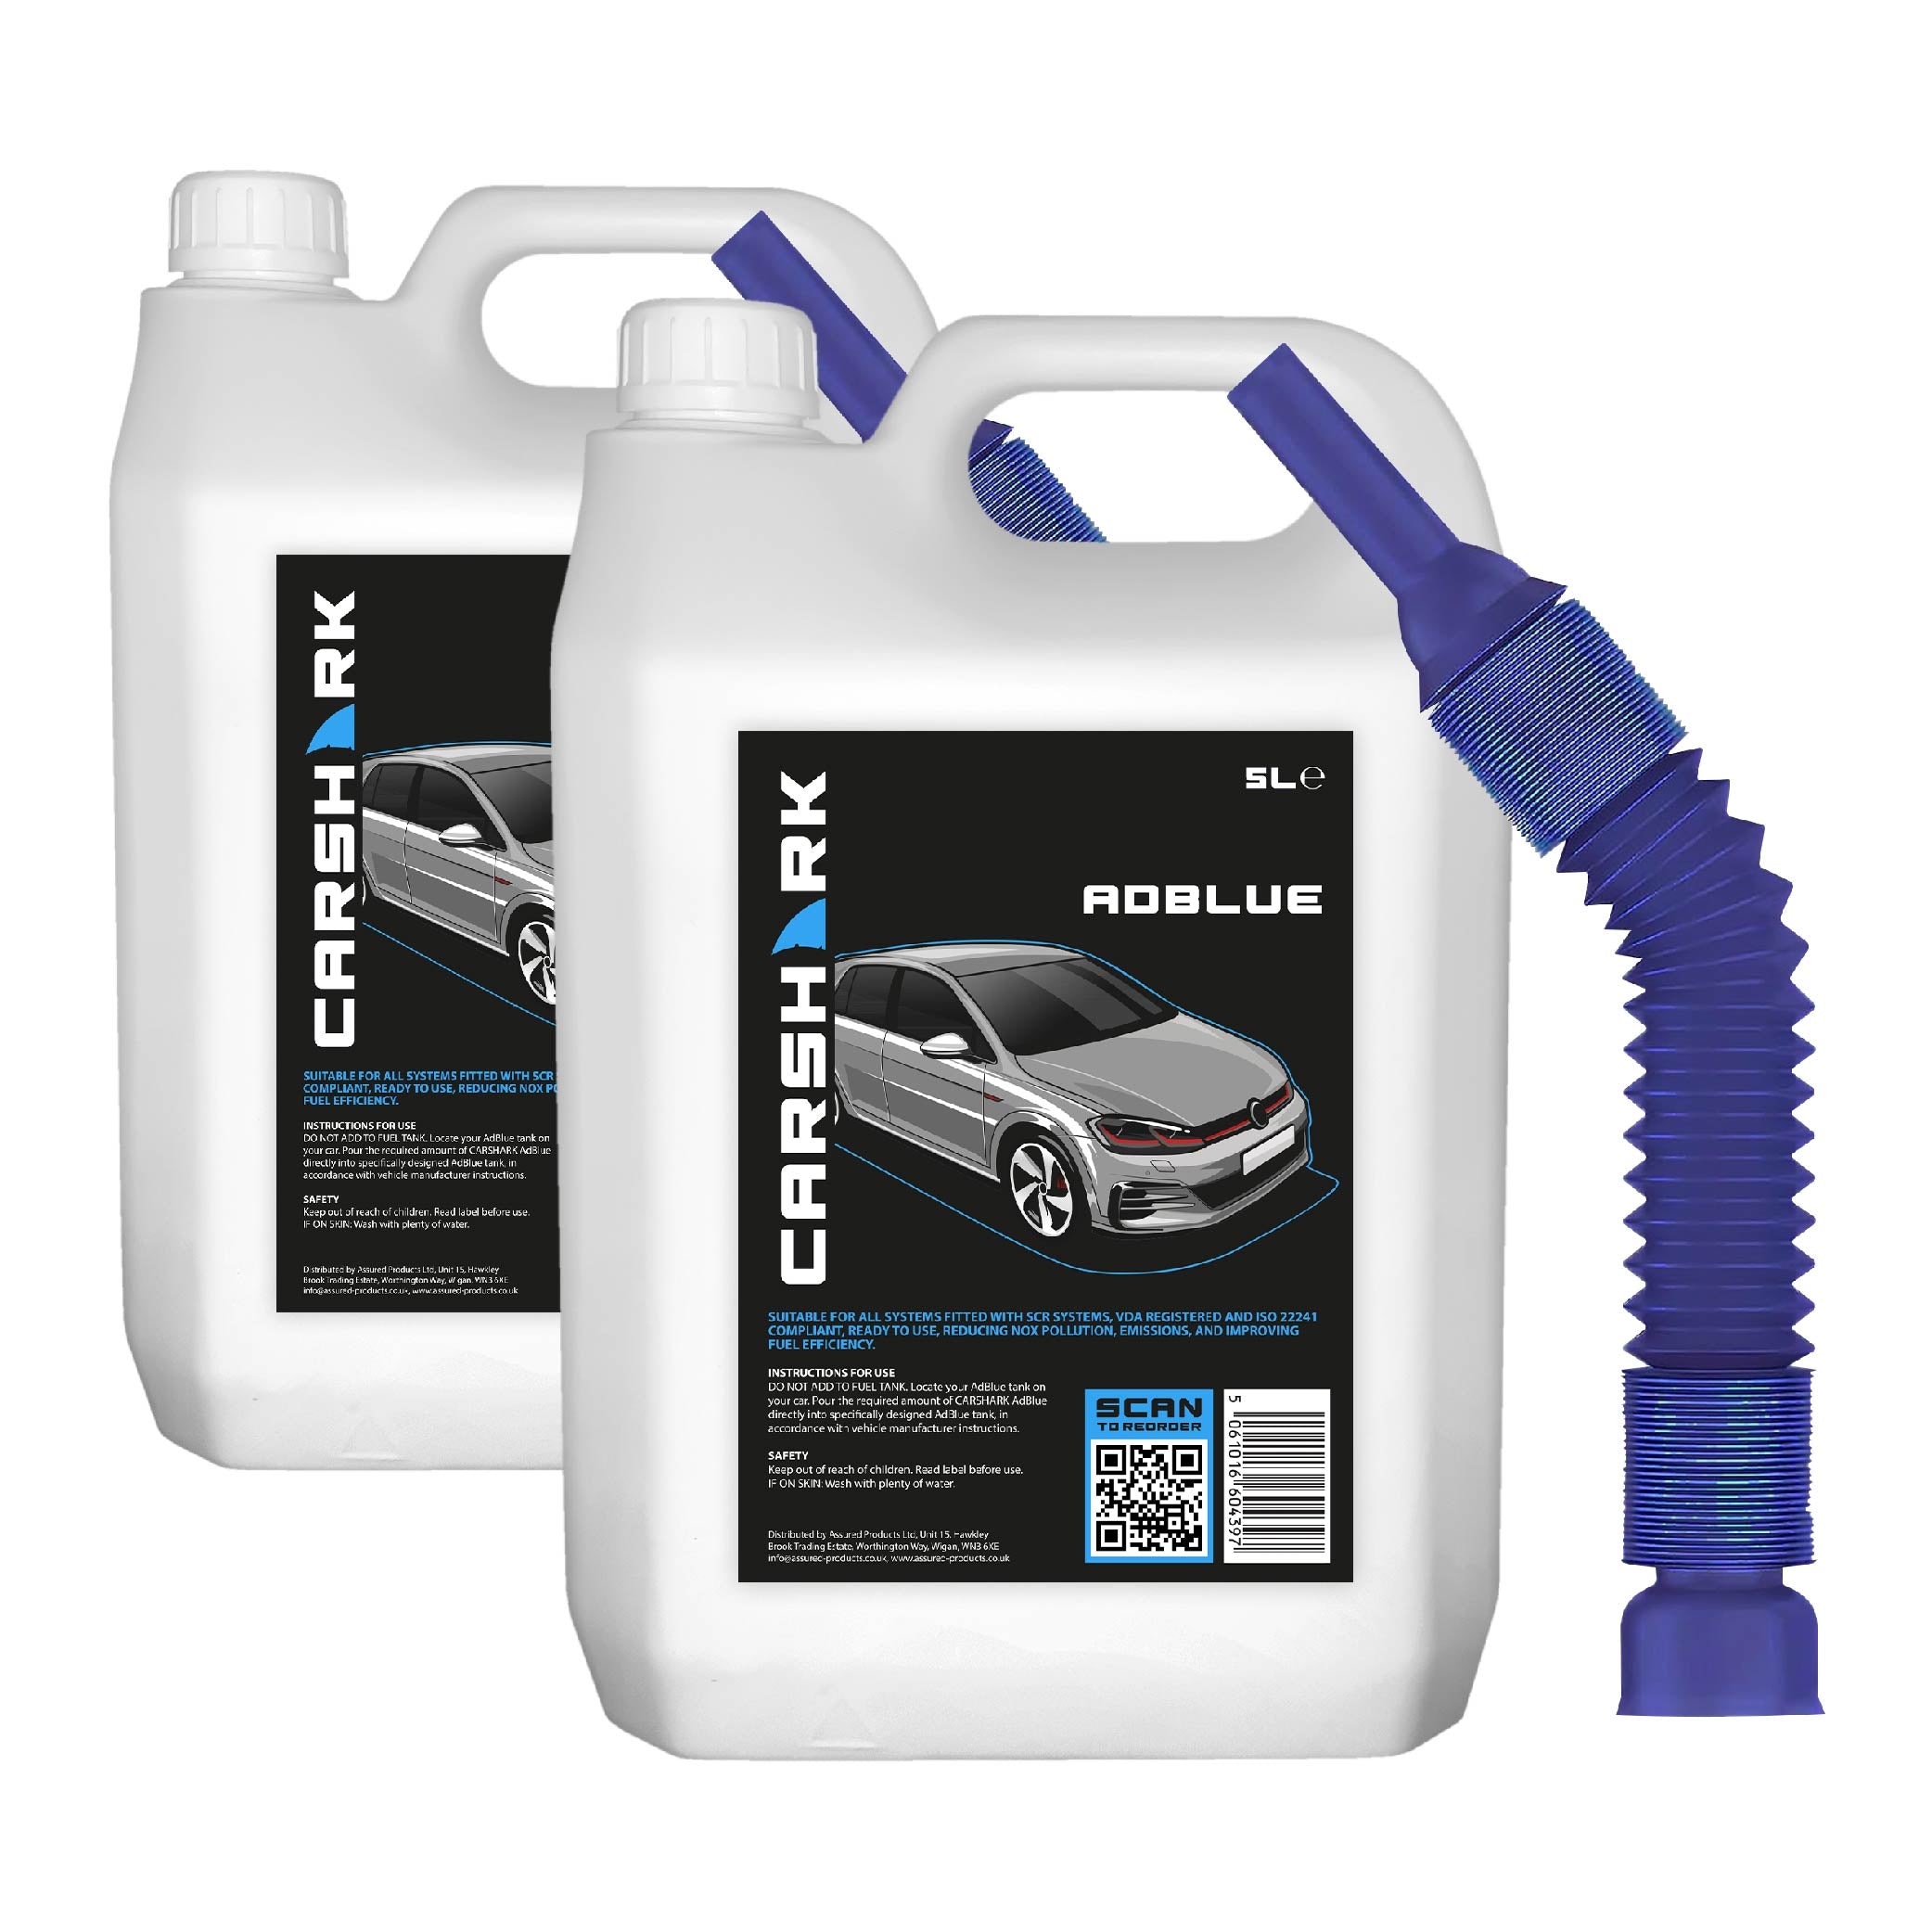 CARSHARK AdBlue Diesel Exhaust Fluid Additive, 2 x 5 Litres, Easy Pour Spout